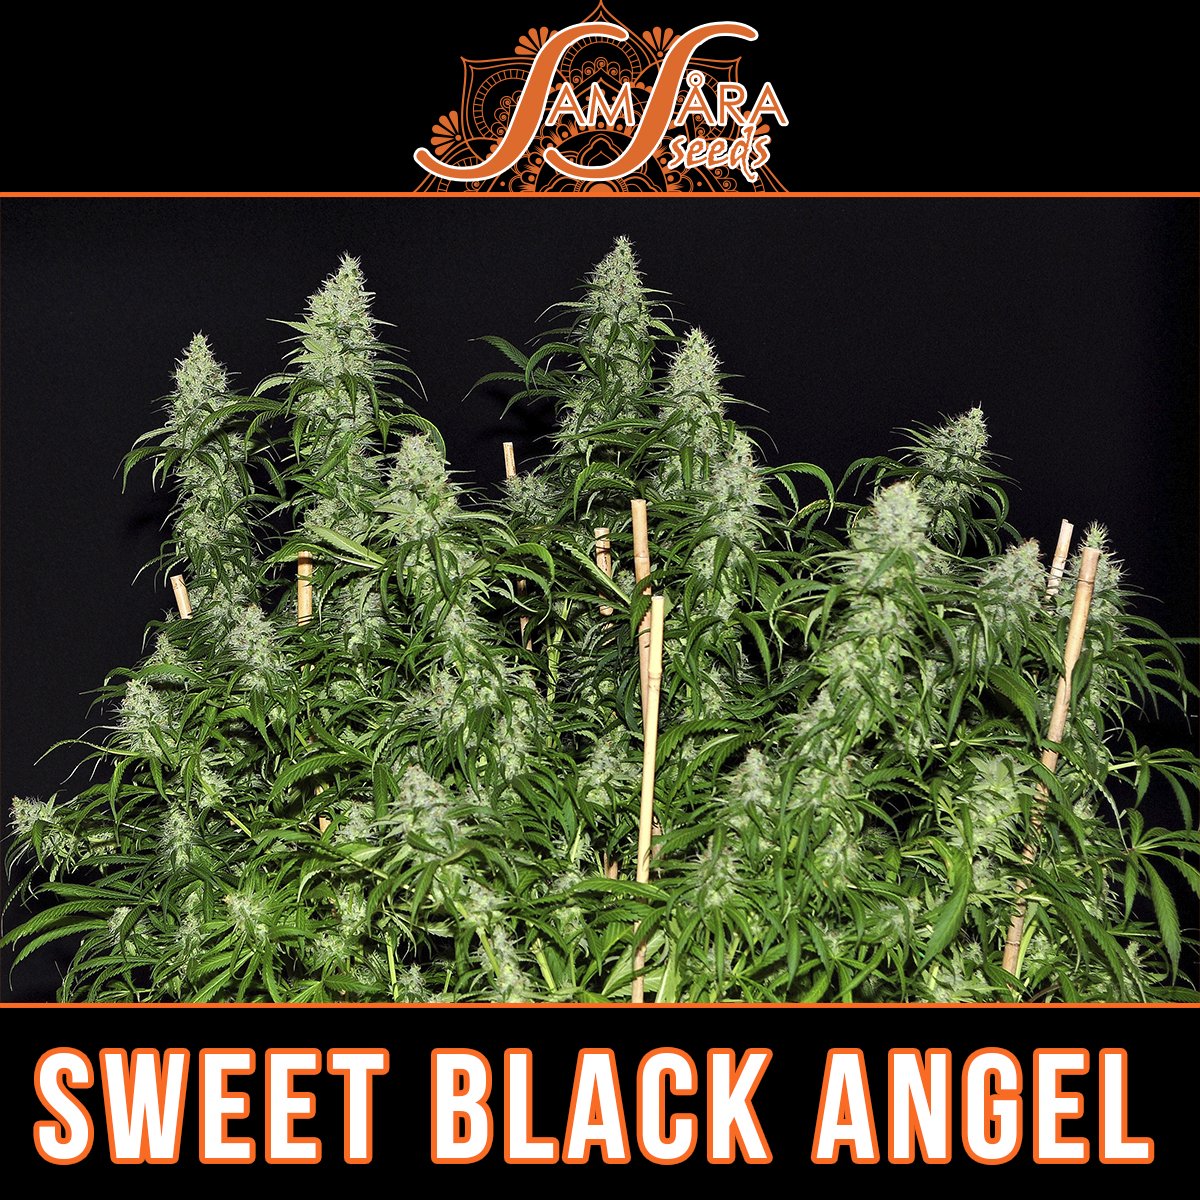 Sweet Black Angel! 🧡🌄  #SweetBlackAngel 
#SamsaraSeeds #TheMysticSeeds #CannabisStrains #CannabisSeeds #indica #indicastrain #cannabisindica #weedstagram #weedporn #weedplant